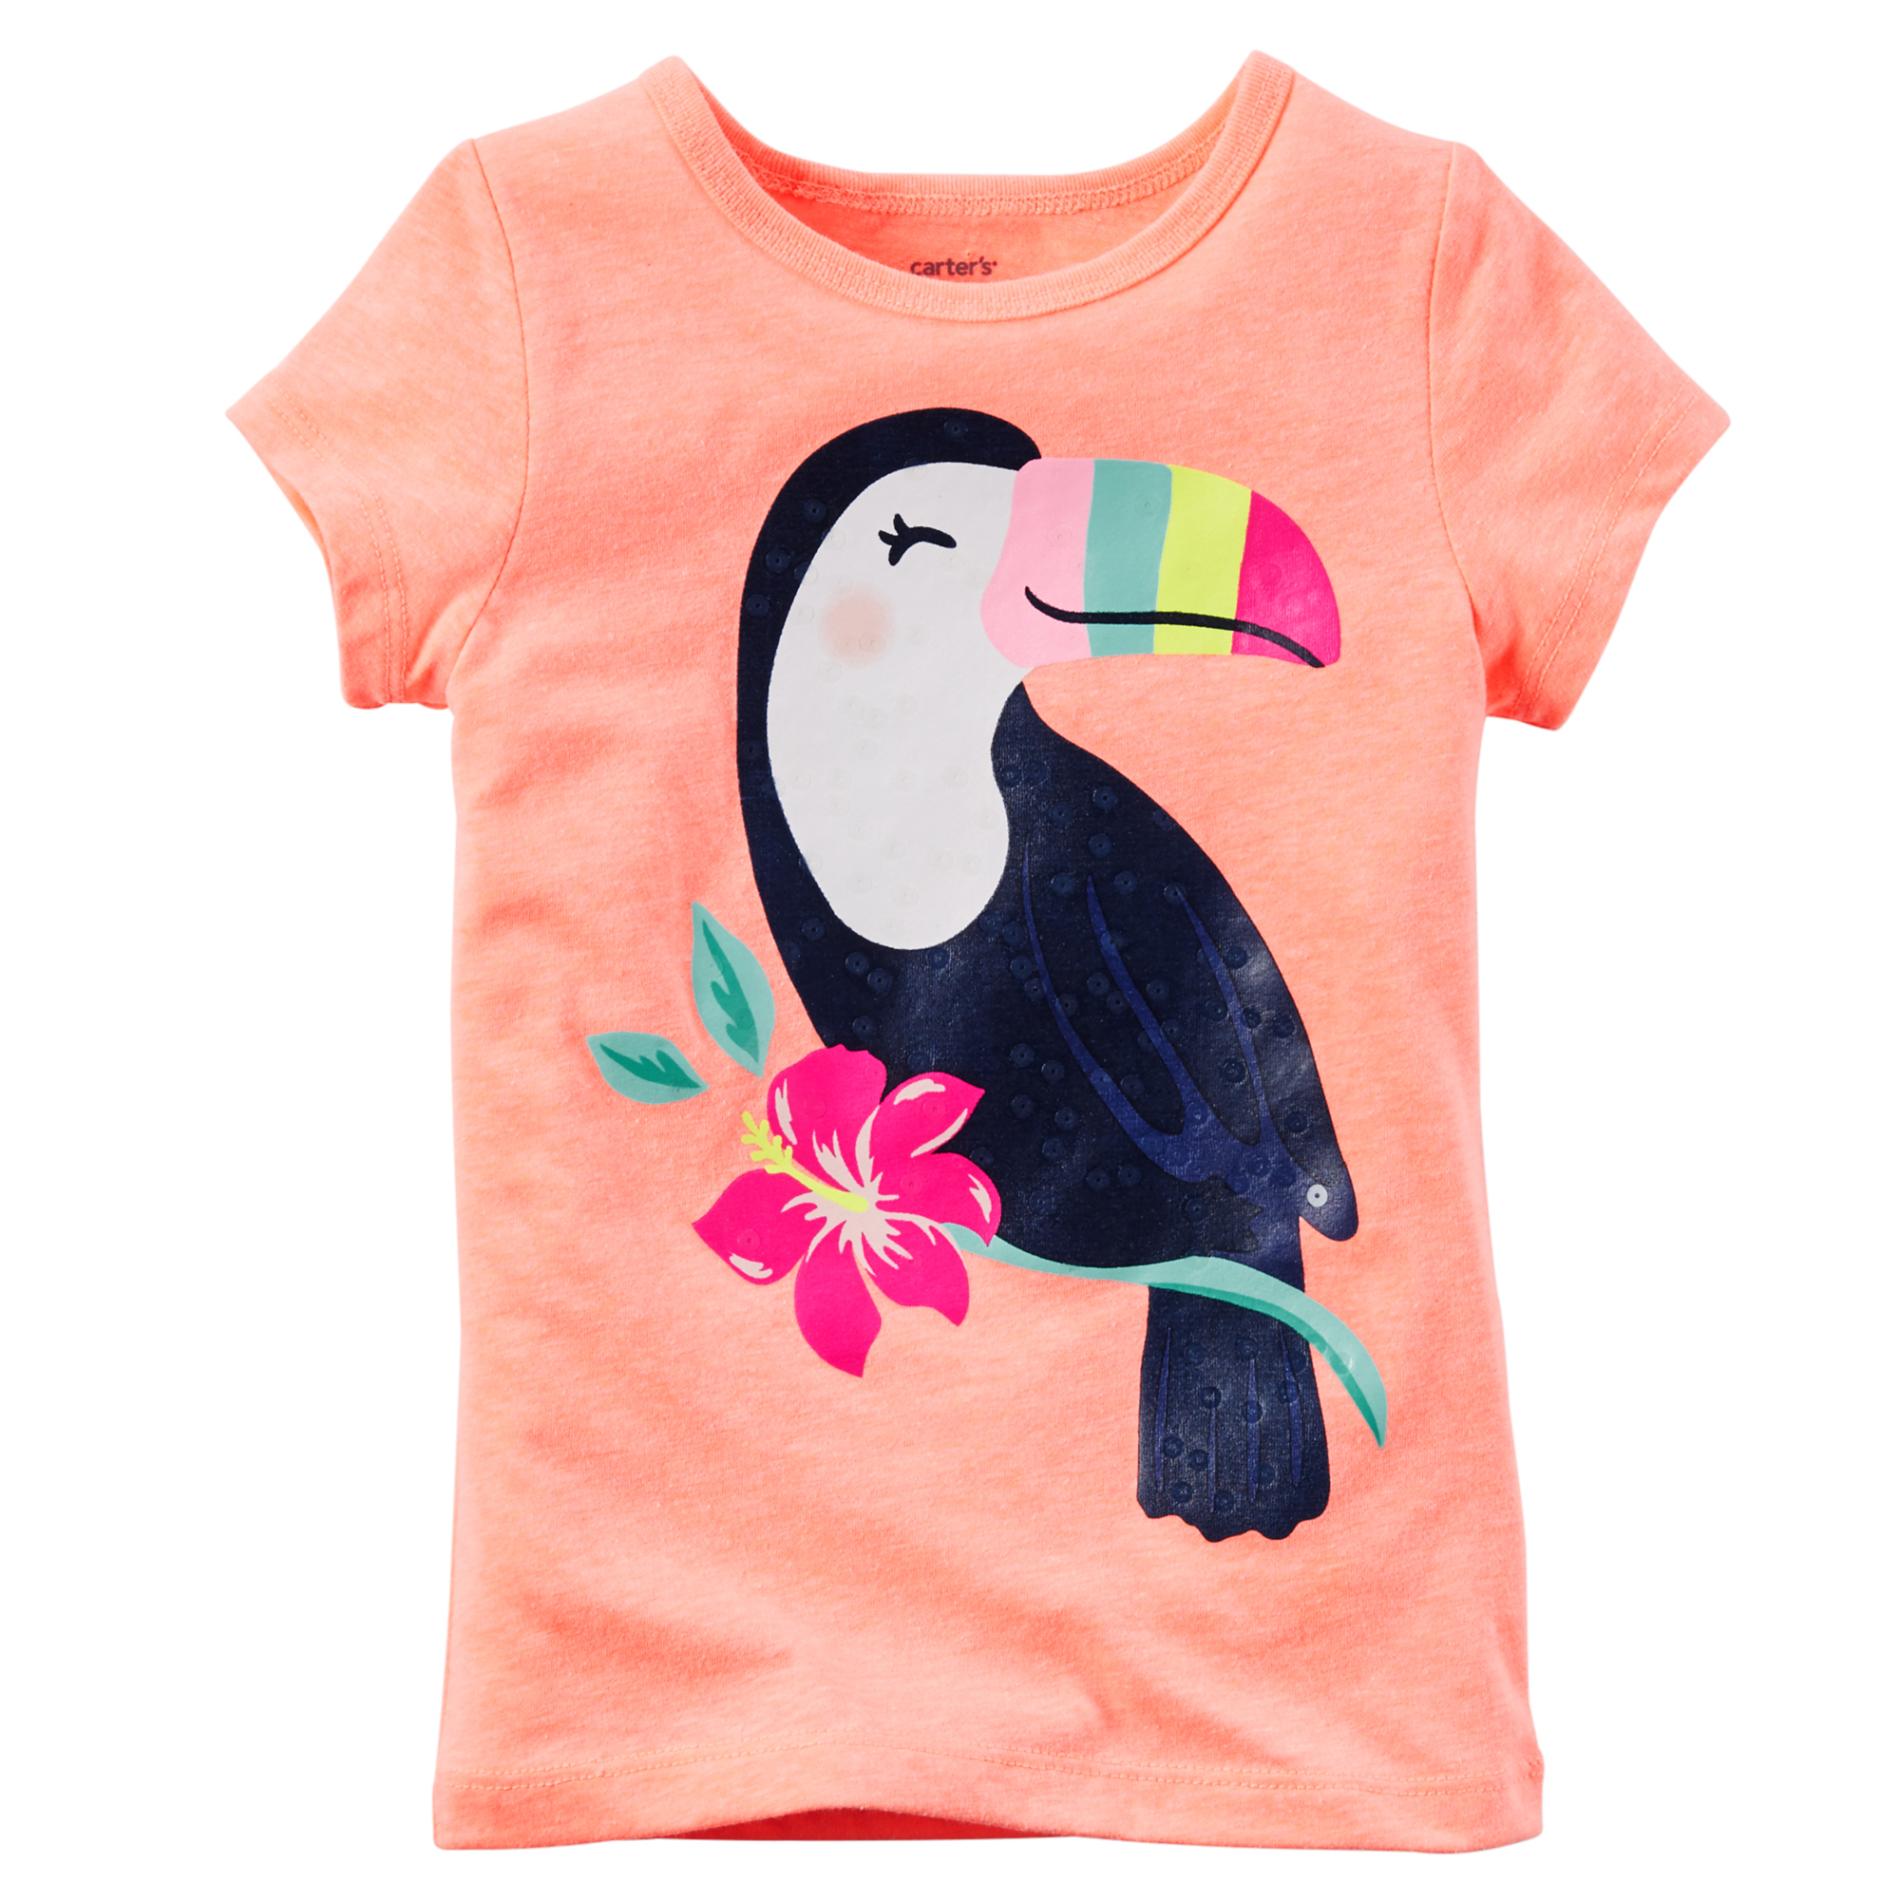 Carter's Toddler Girl's Graphic T-Shirt - Toucan